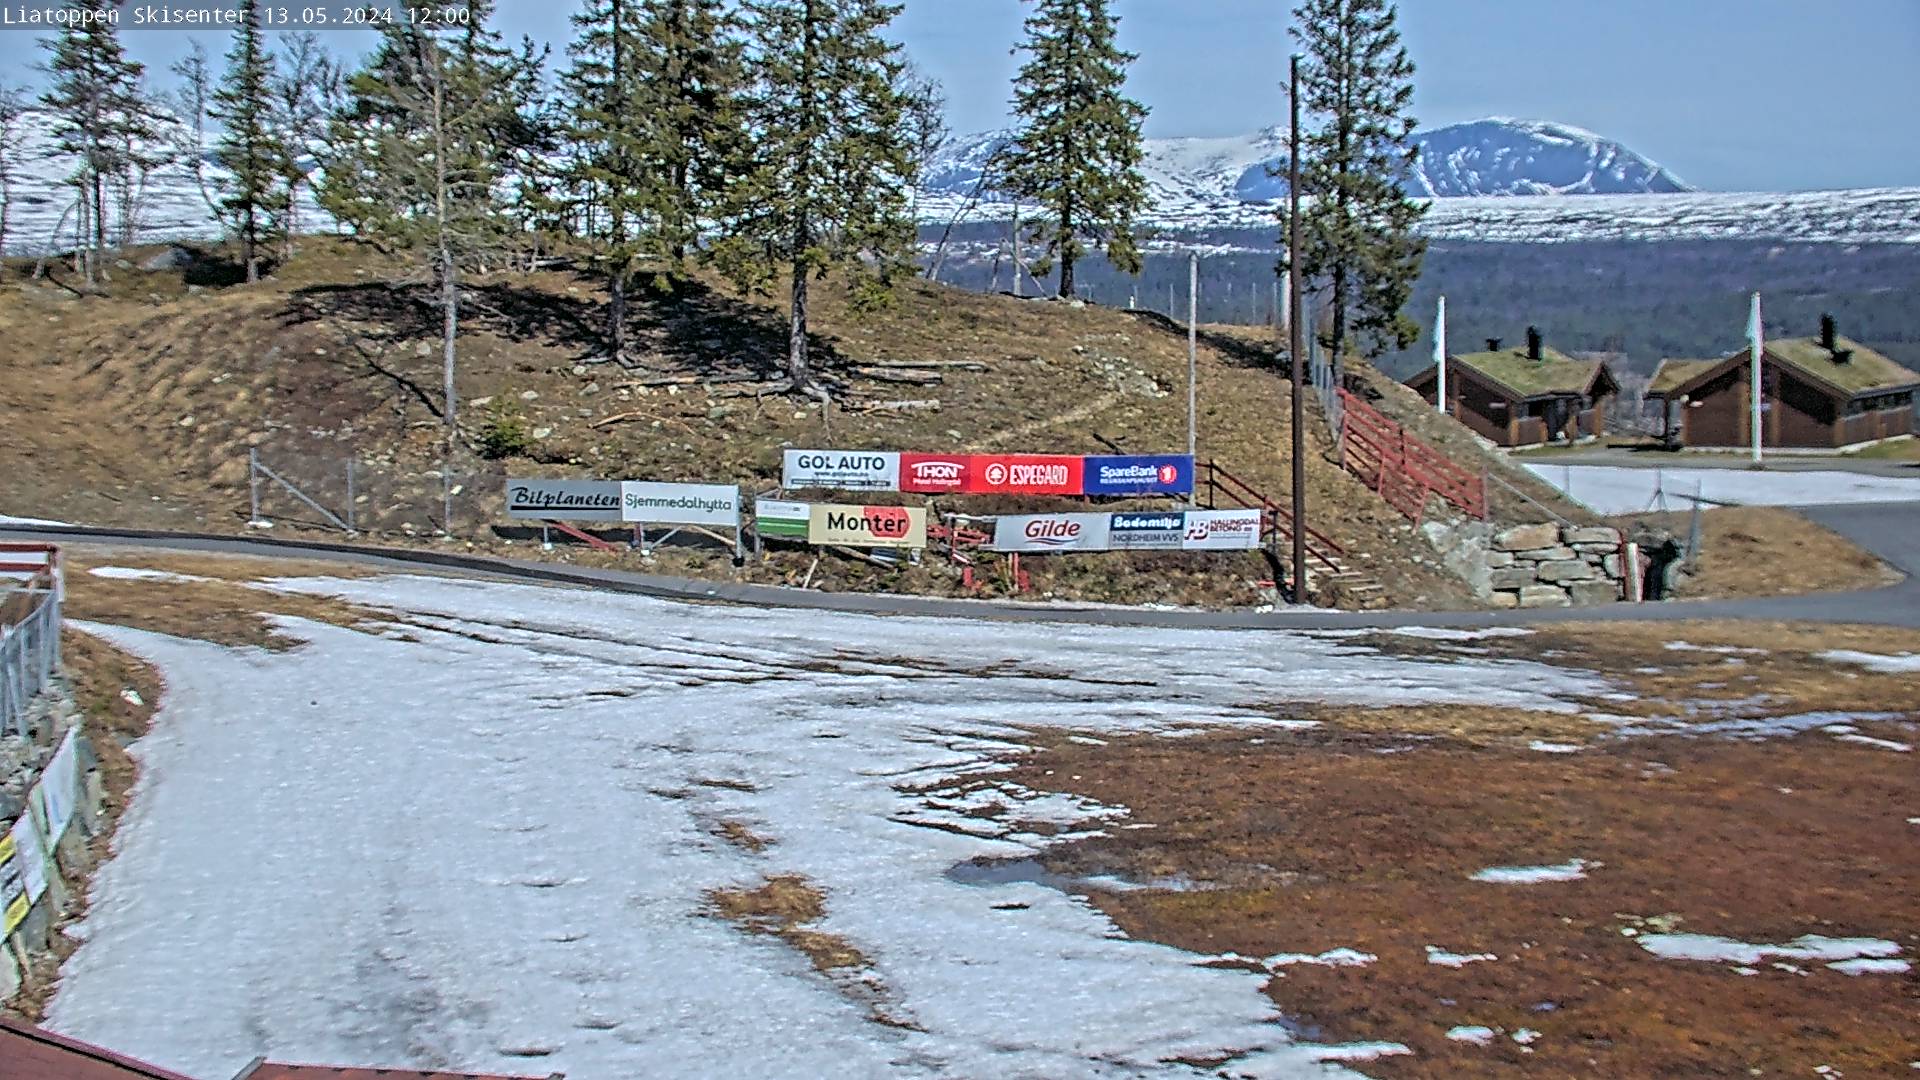 Webcam Liatoppen skisenter, Ål, Buskerud, Norwegen